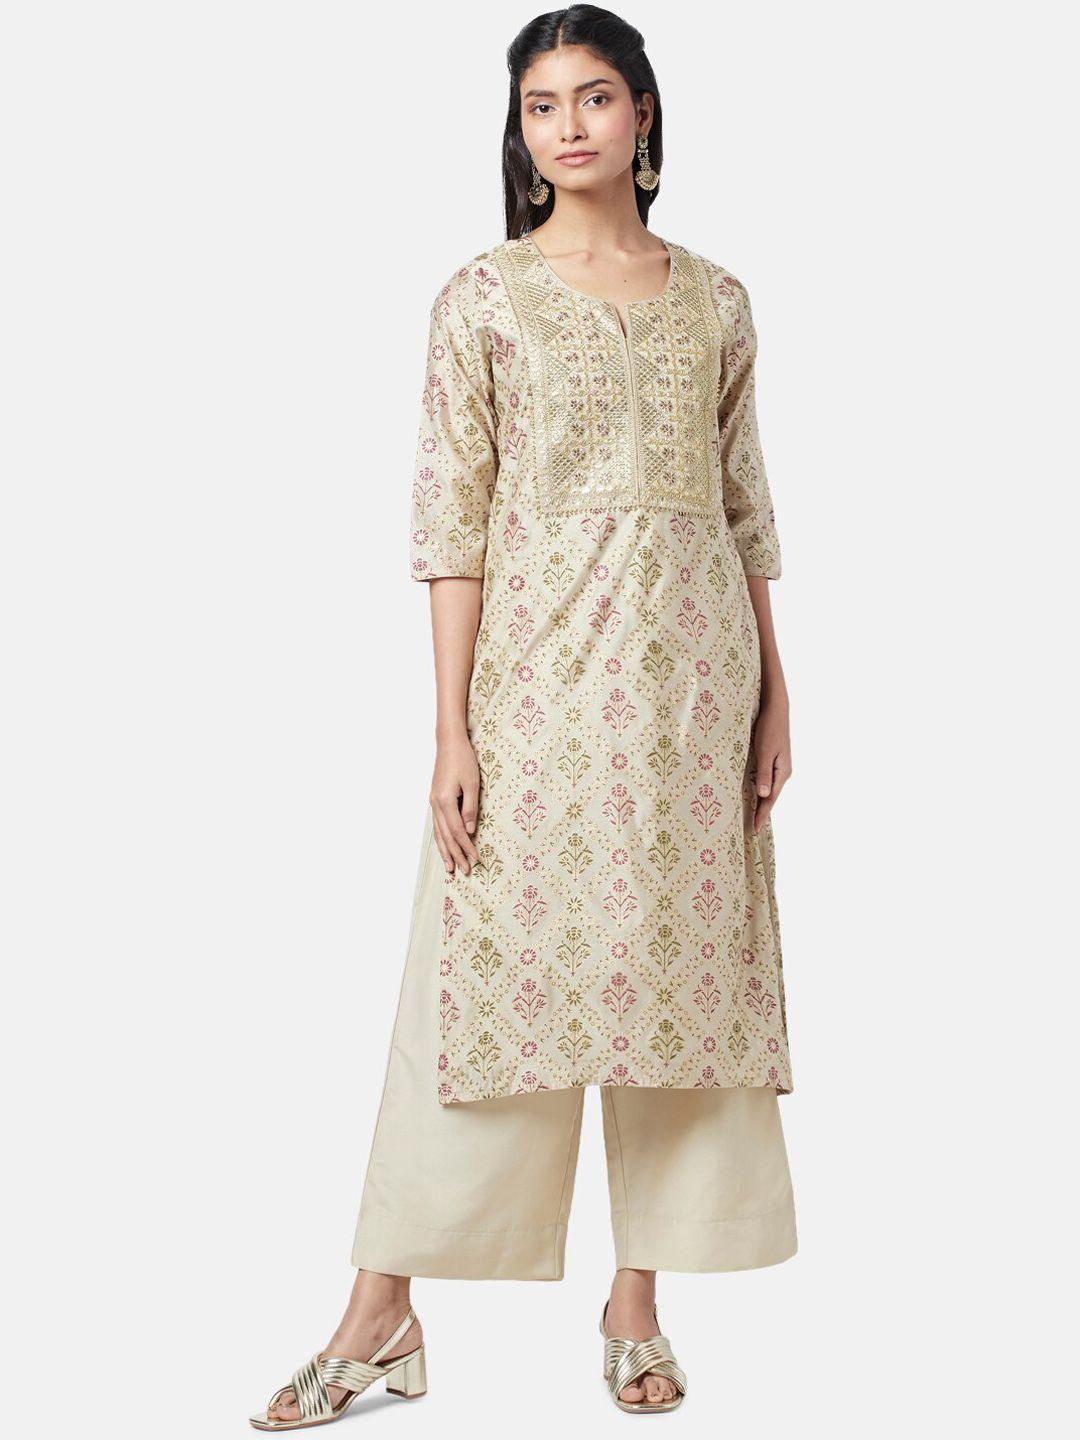 rangmanch by pantaloons women embroidered notch neck kurta with palazzos & dupatta